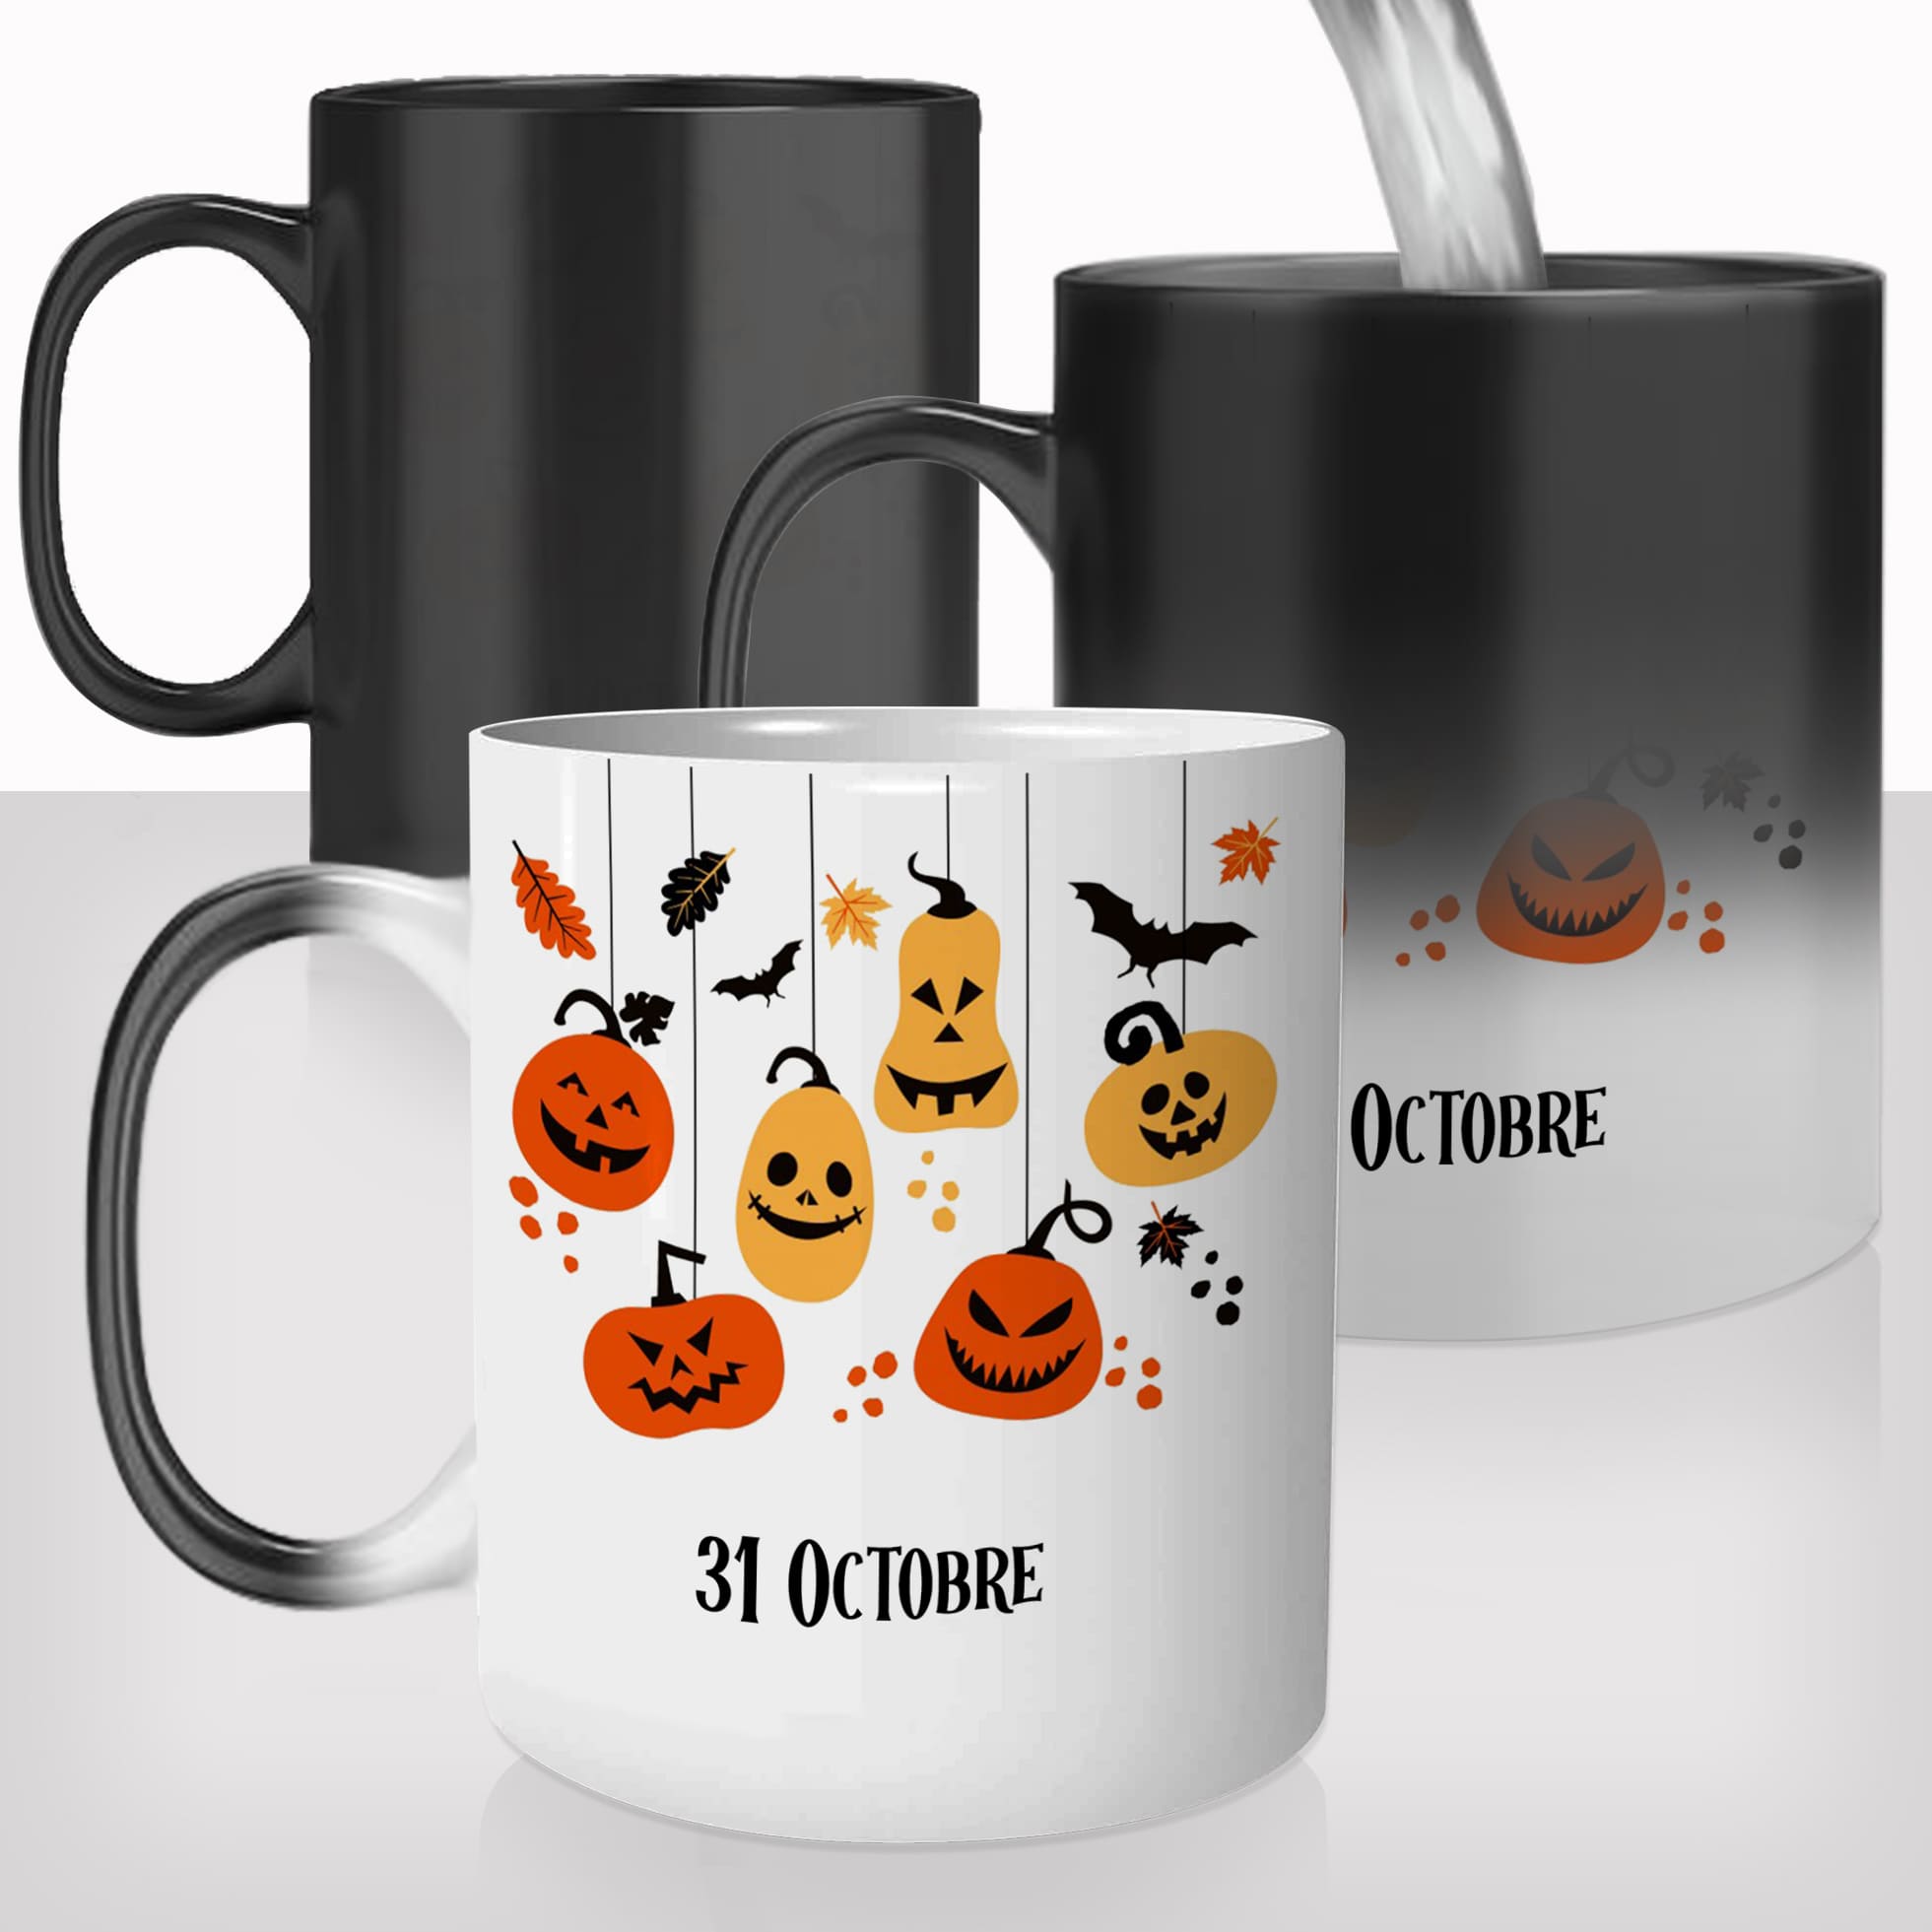 mug-magique-personnalisable-thermoreactif-tasse-thermique-octobre-novembre-halloween-noel-mood-citrouille-sapin-boules-fun-idée-cadeau-original2